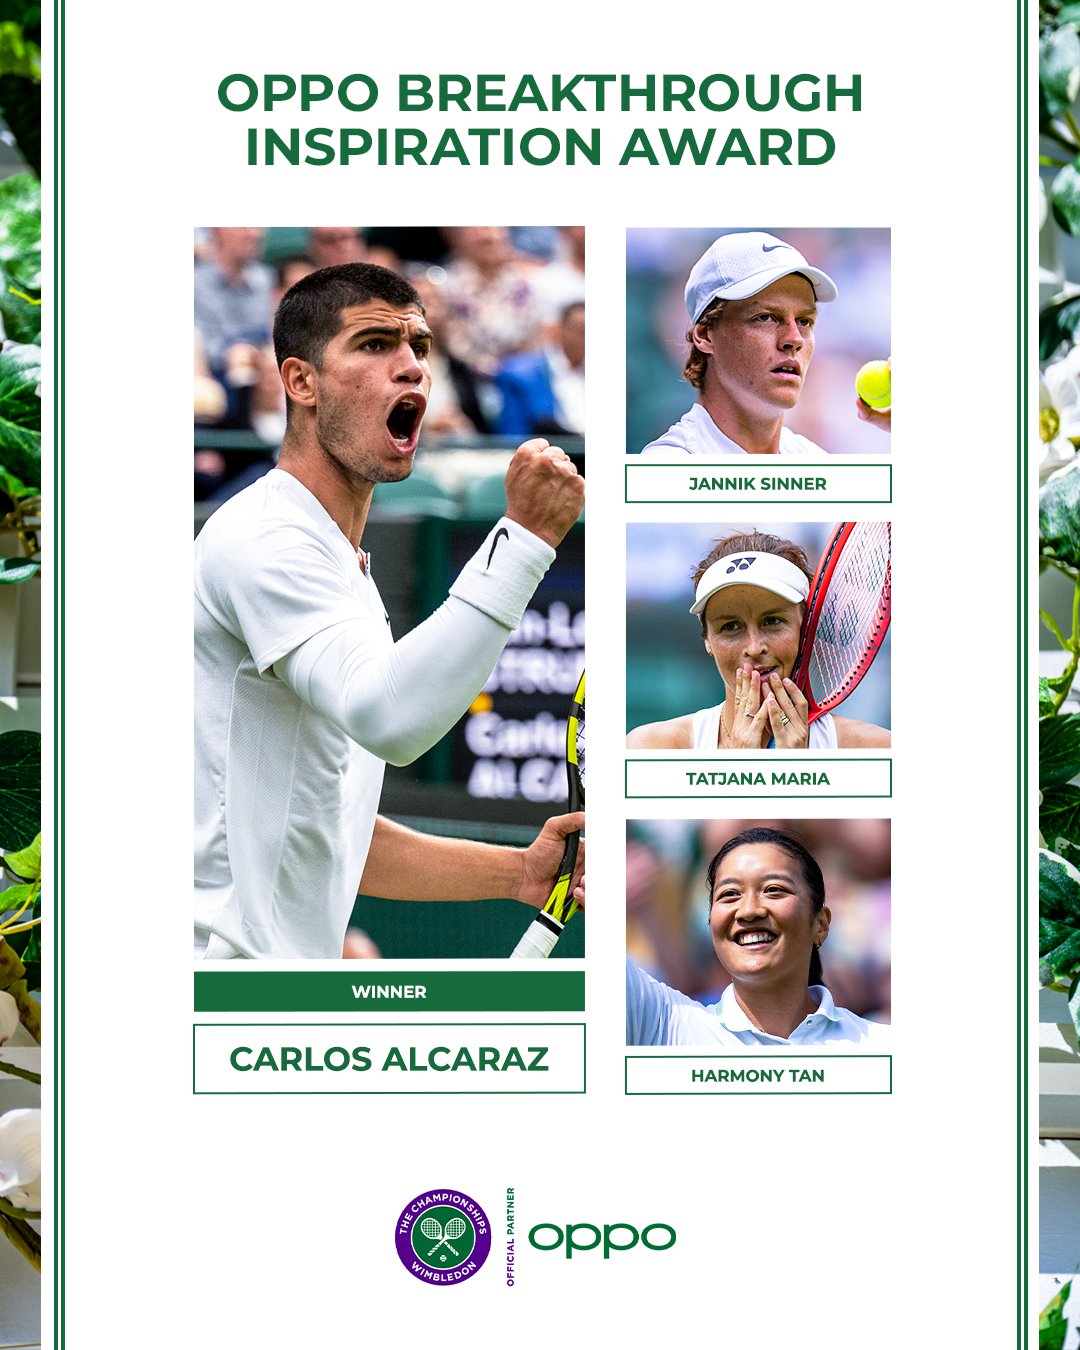 The winner of the OPPO Breakthrough Inspiration Award at Wimbledon 2022– Carlos Alcaraz